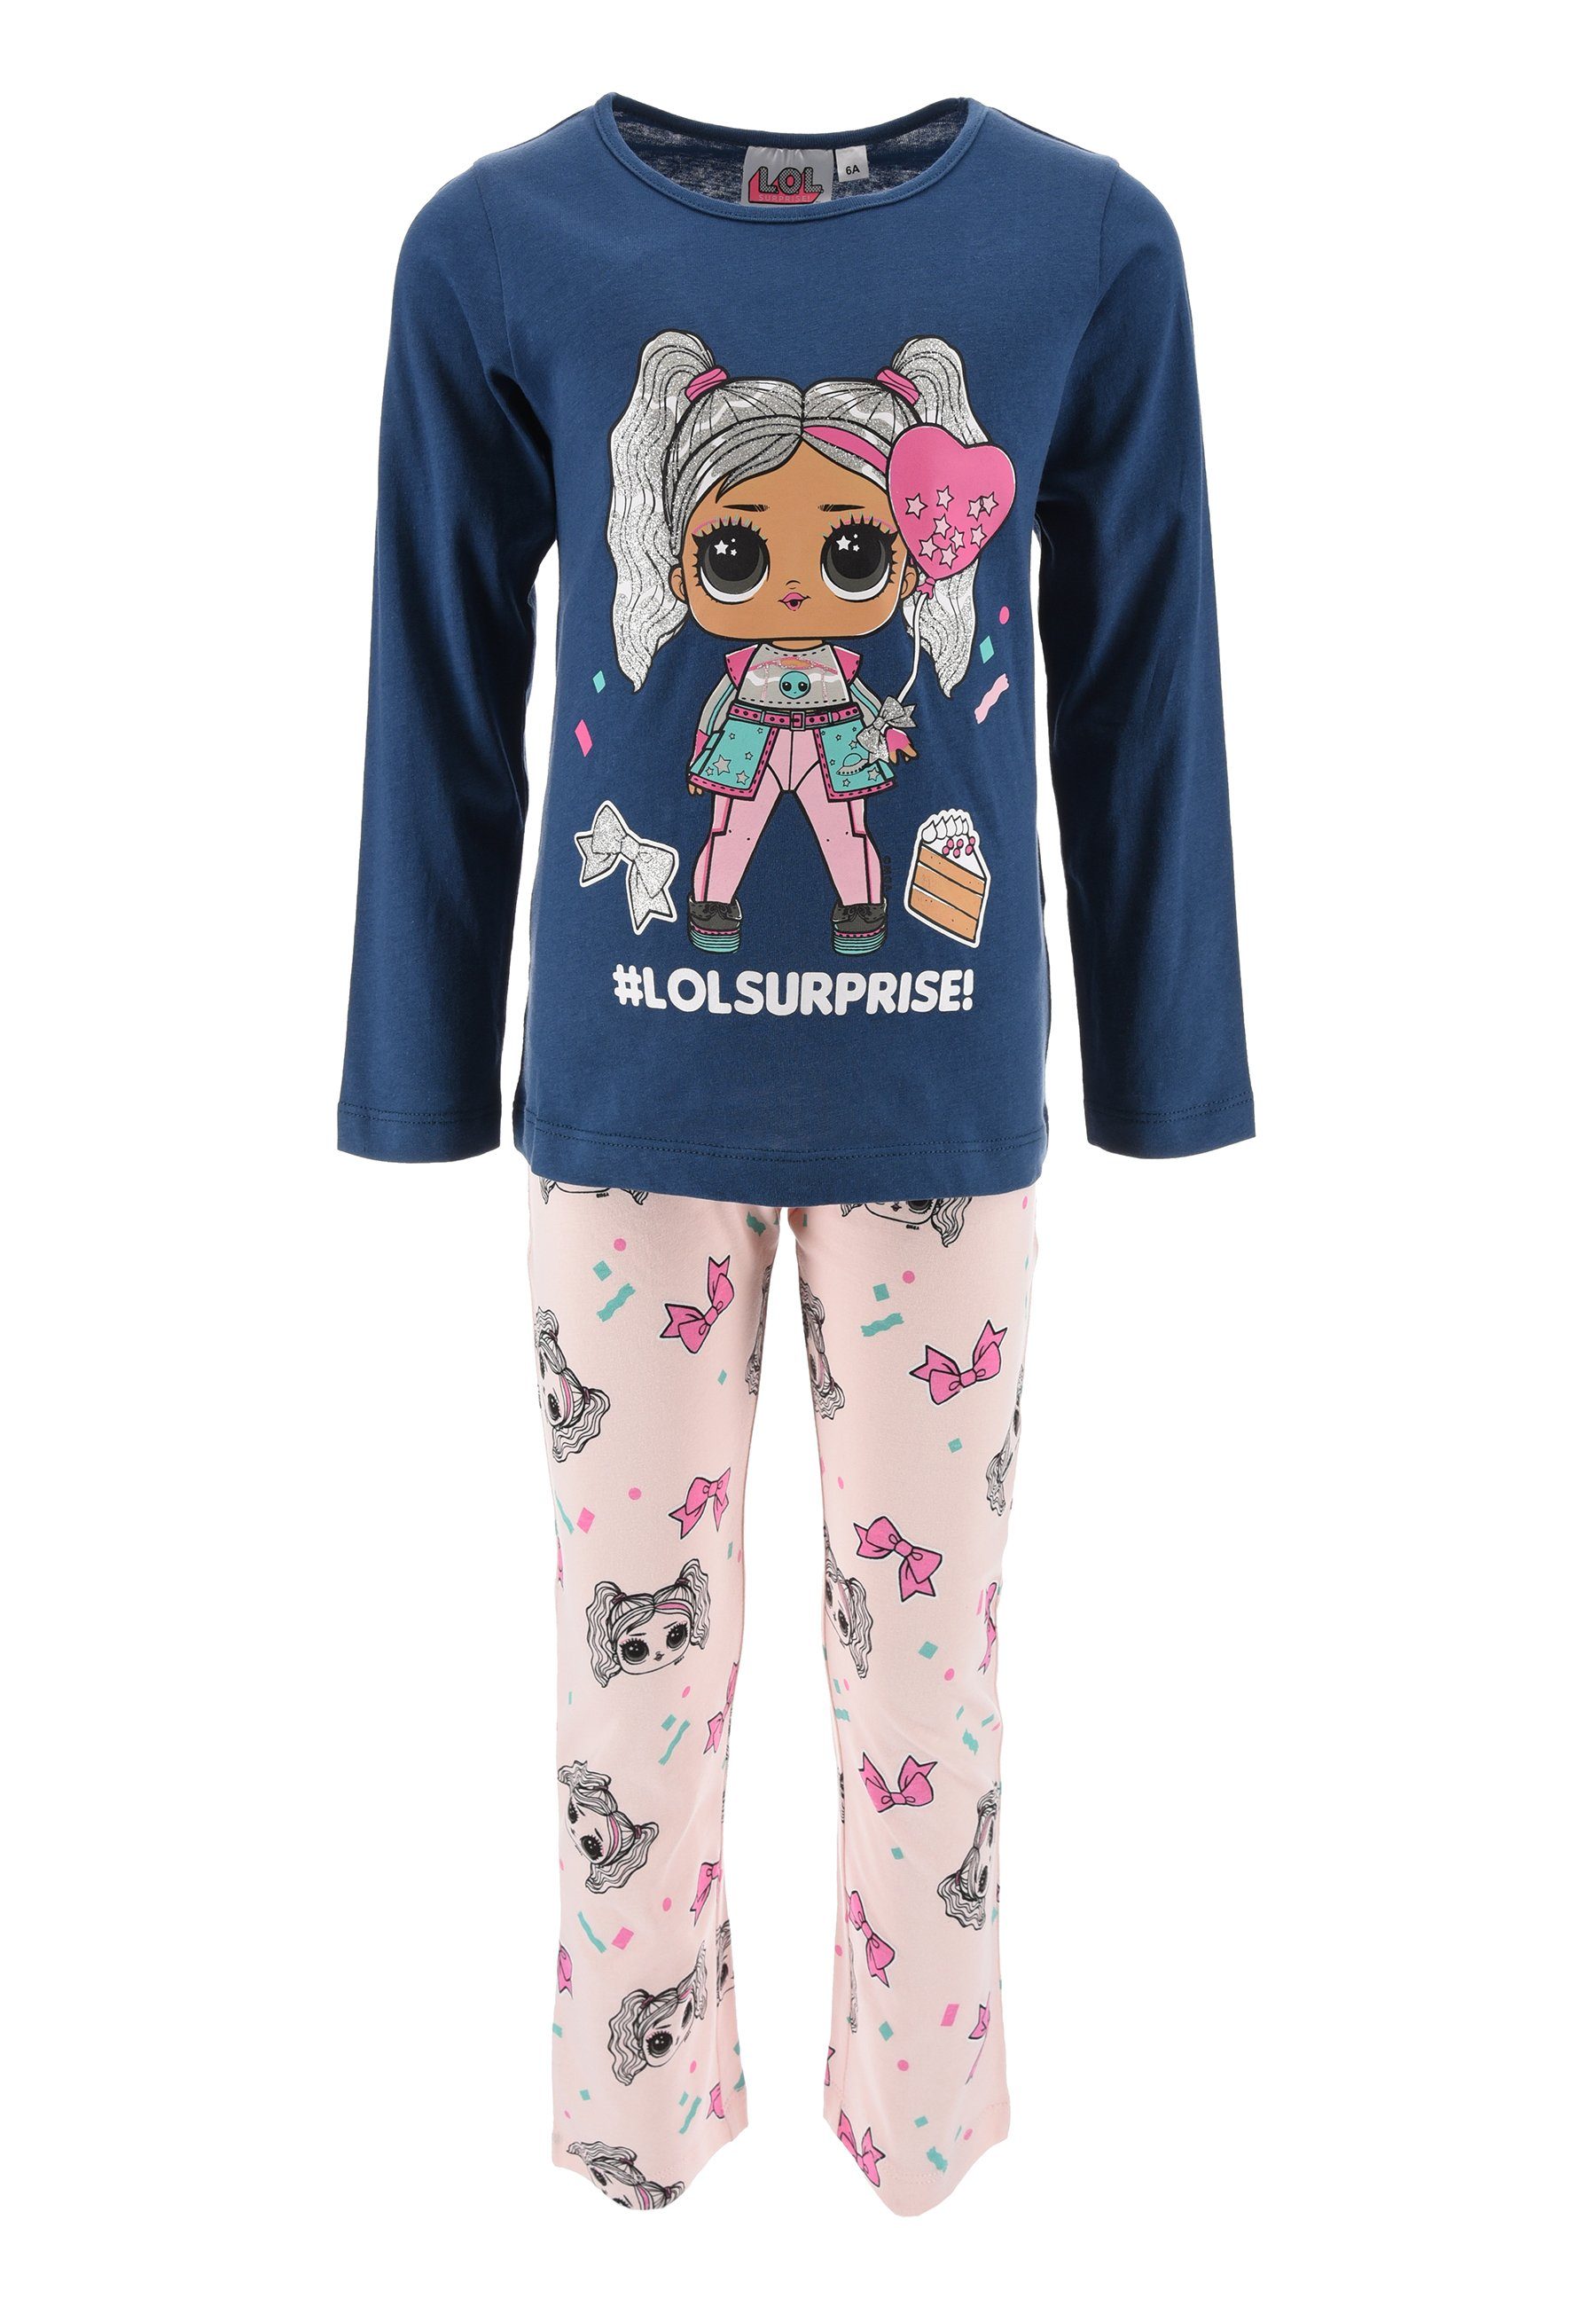 L.O.L. SURPRISE! Schlafanzug Kinder Mädchen Schlafanzug Kinder Pyjama Langarm Shirt + Schlaf-Hose (2 tlg) Dunkel-Blau